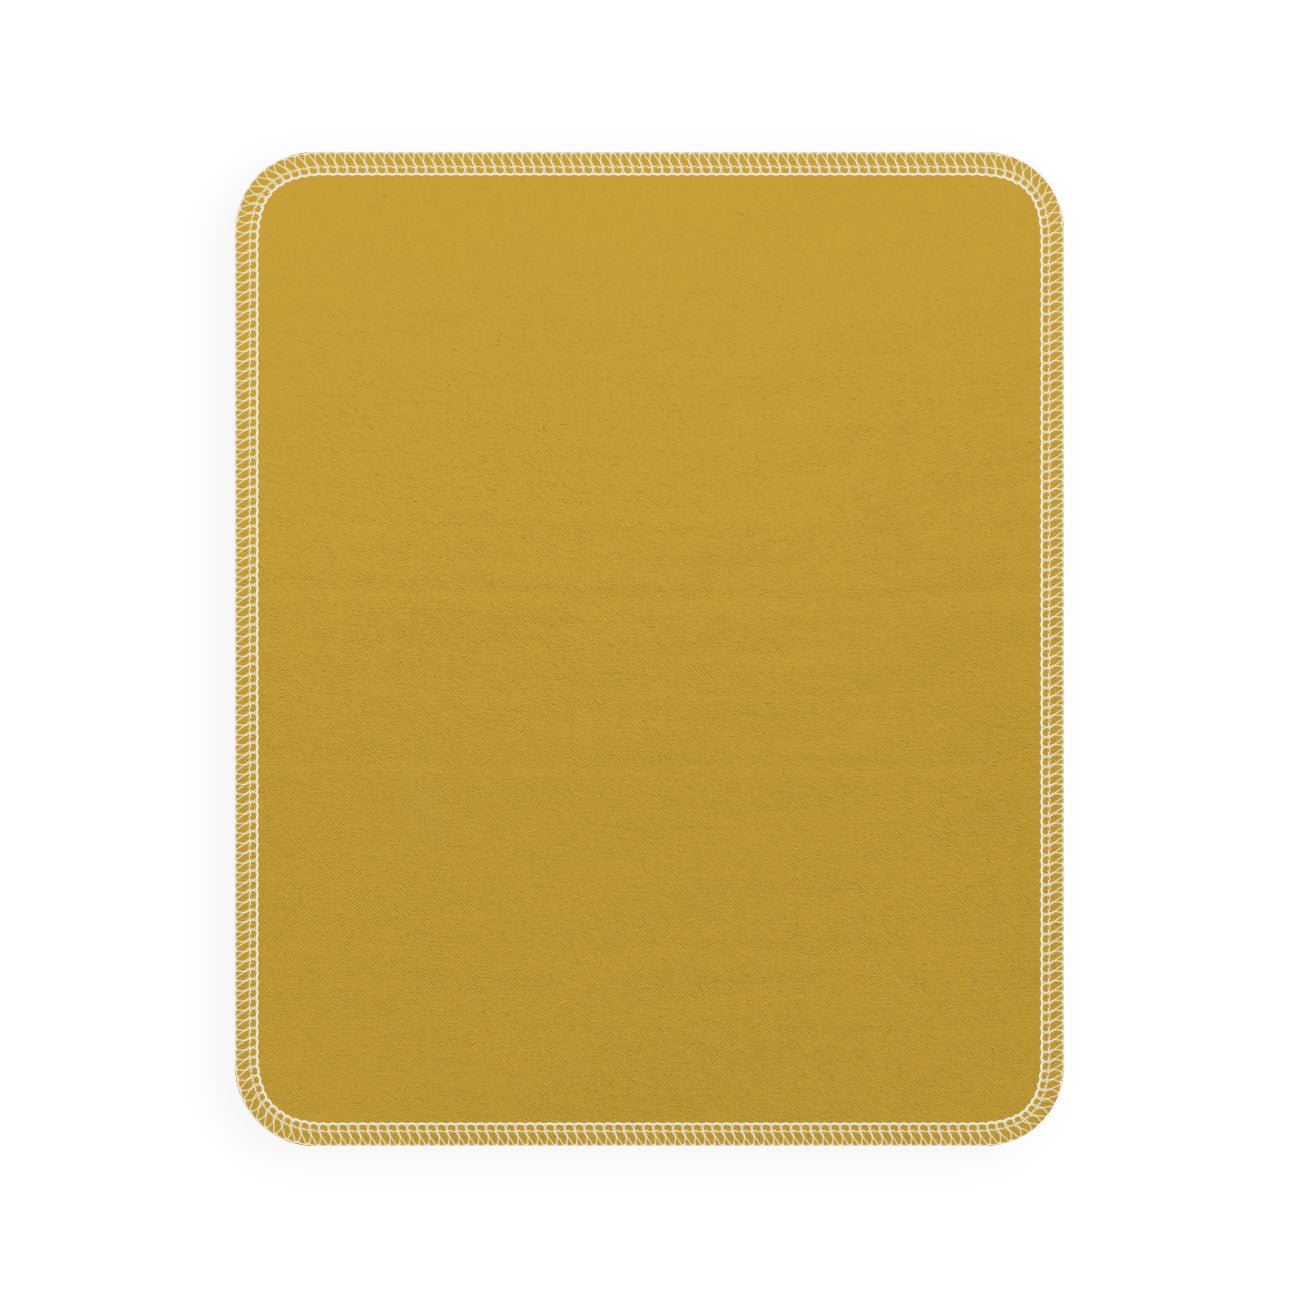 Marley's Monsters UNpaper® Towel Single: Mustard Yellow